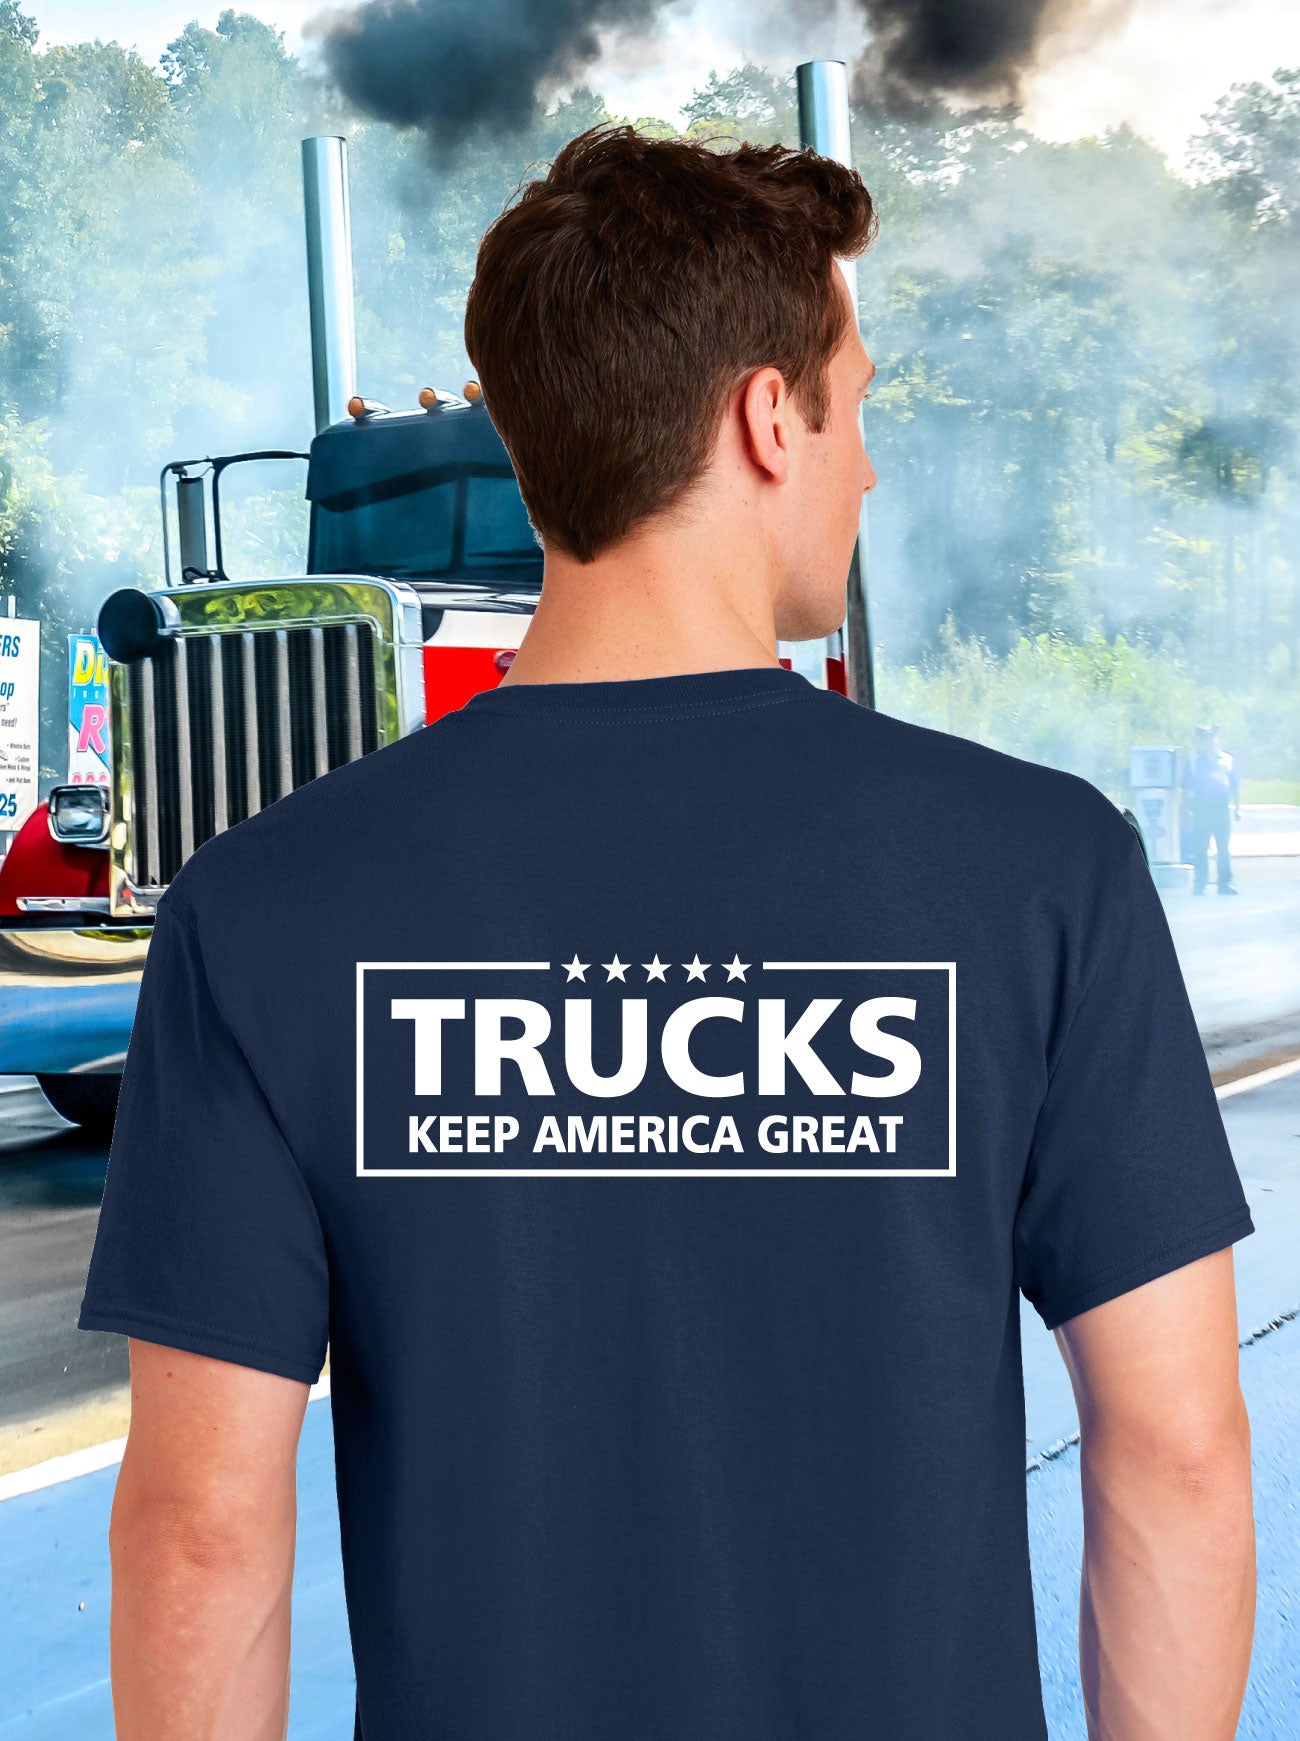 Trucks Keep America Great Navy Blue T-Shirt